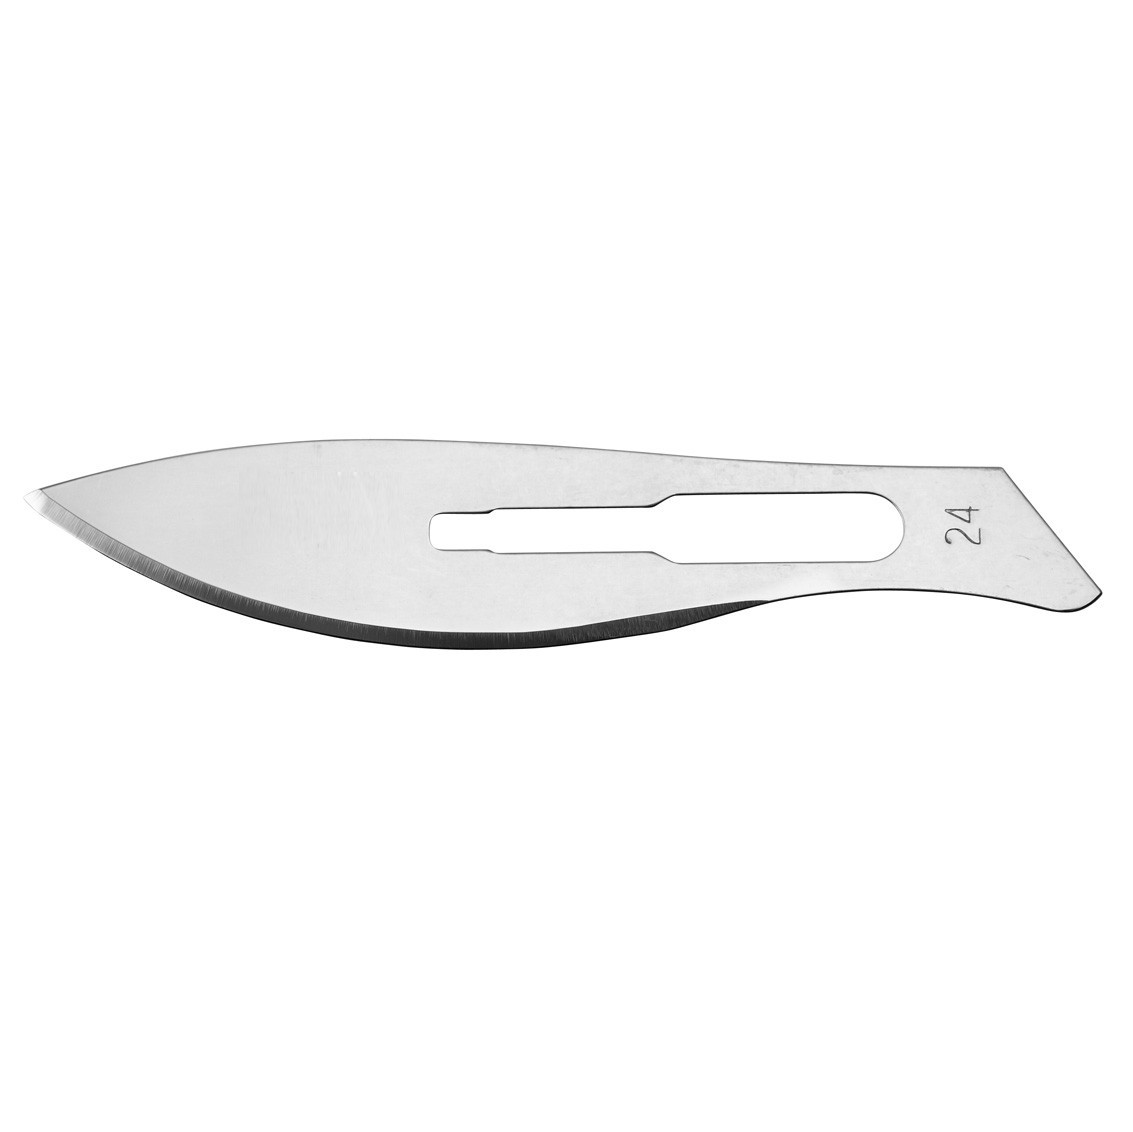 Paramount sterile single-use professional scalpel blades size 24 100 pcs